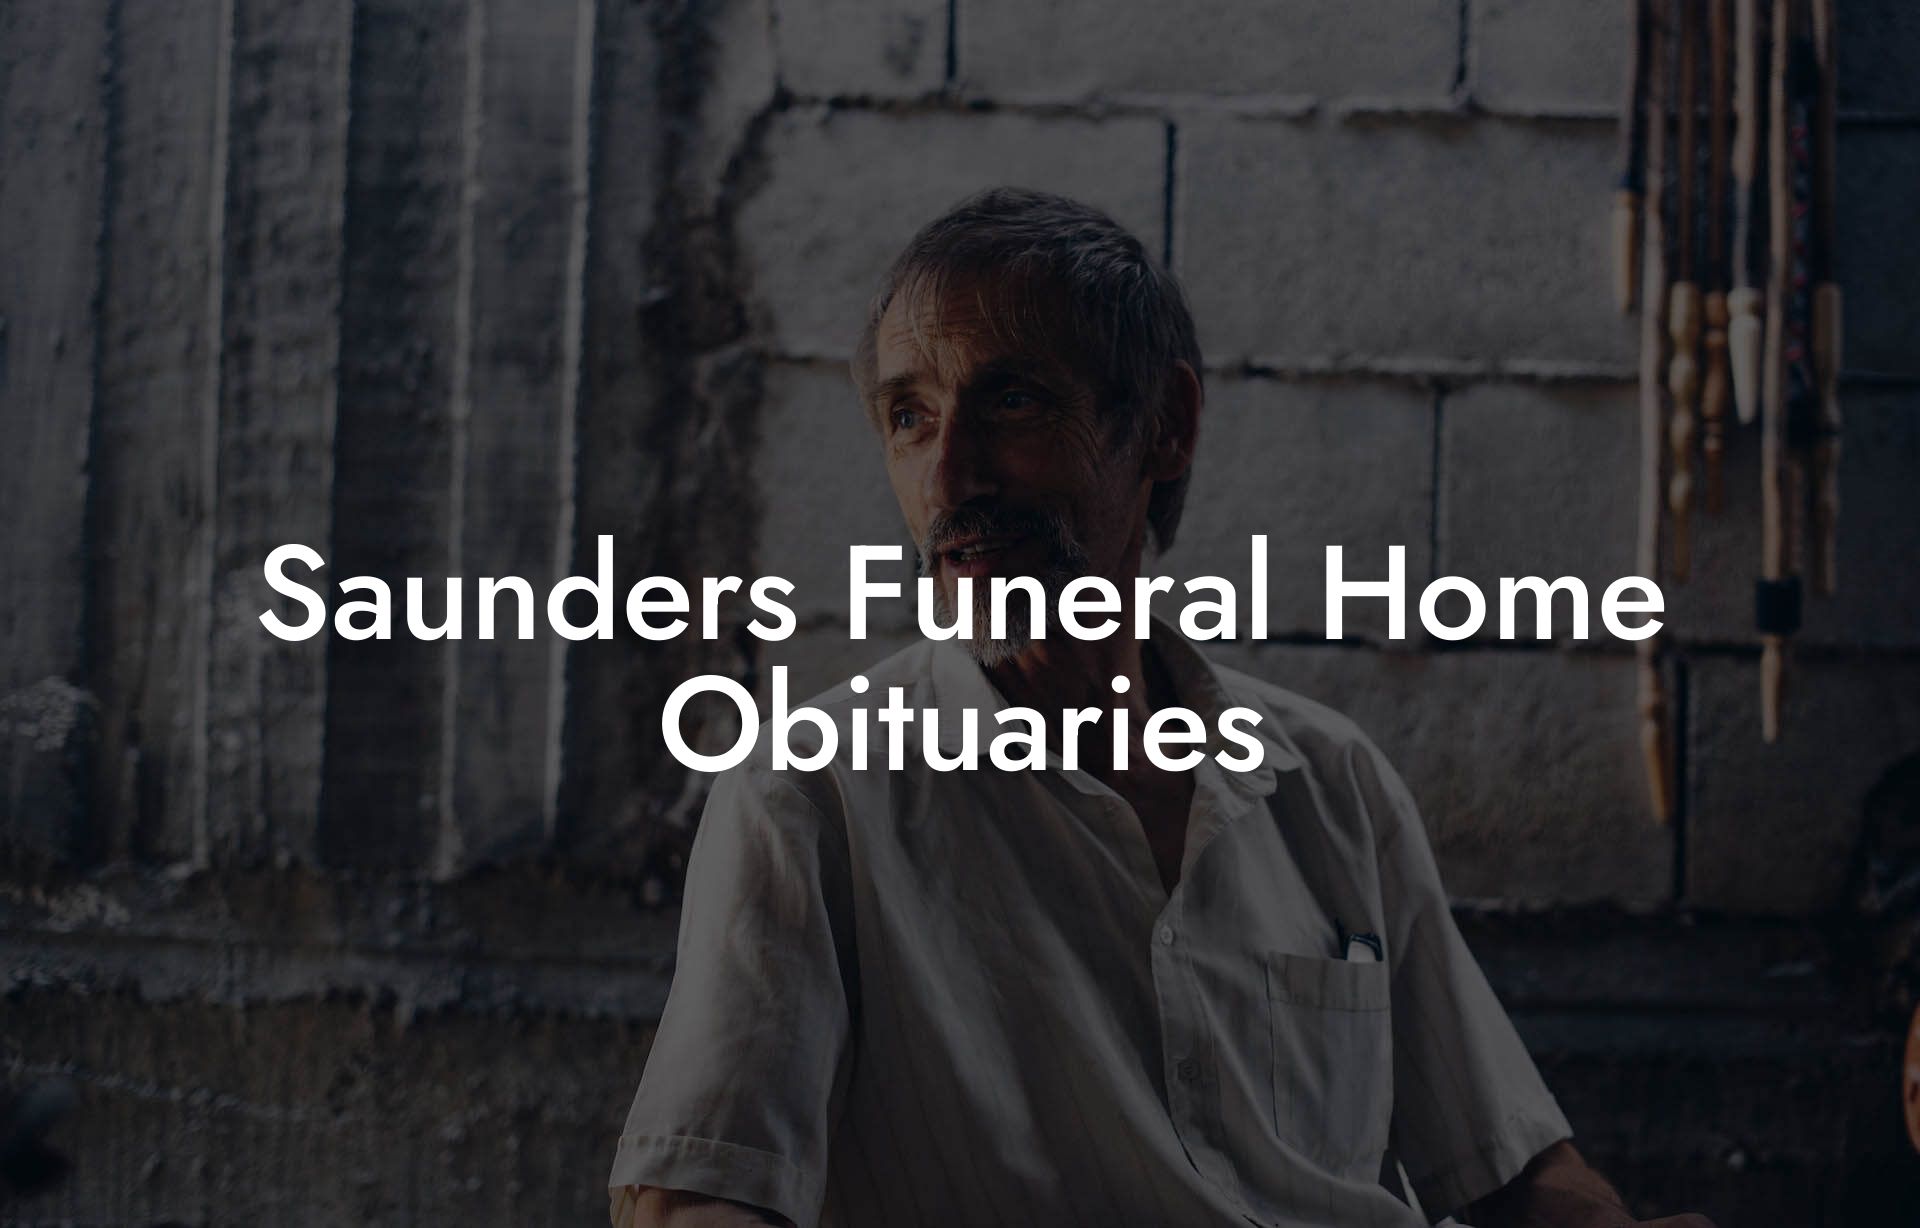 Saunders Funeral Home Obituaries